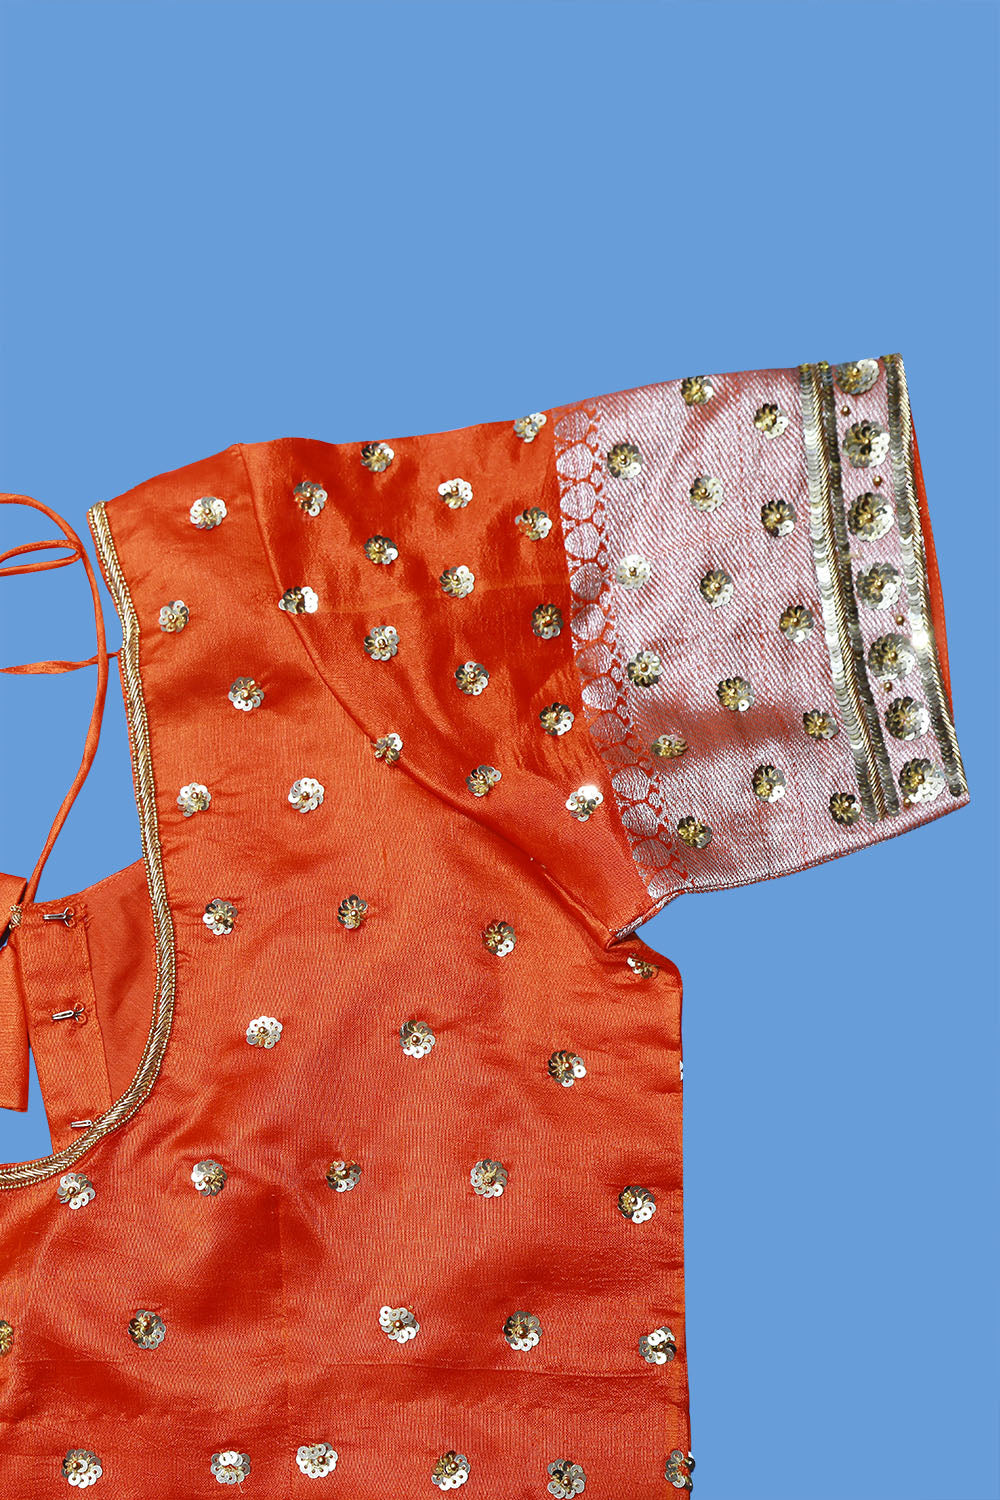 Pattu langa jacket ideas with maggam work blouse// pattu langa with aari  work blouses for kids 😍 - YouTube